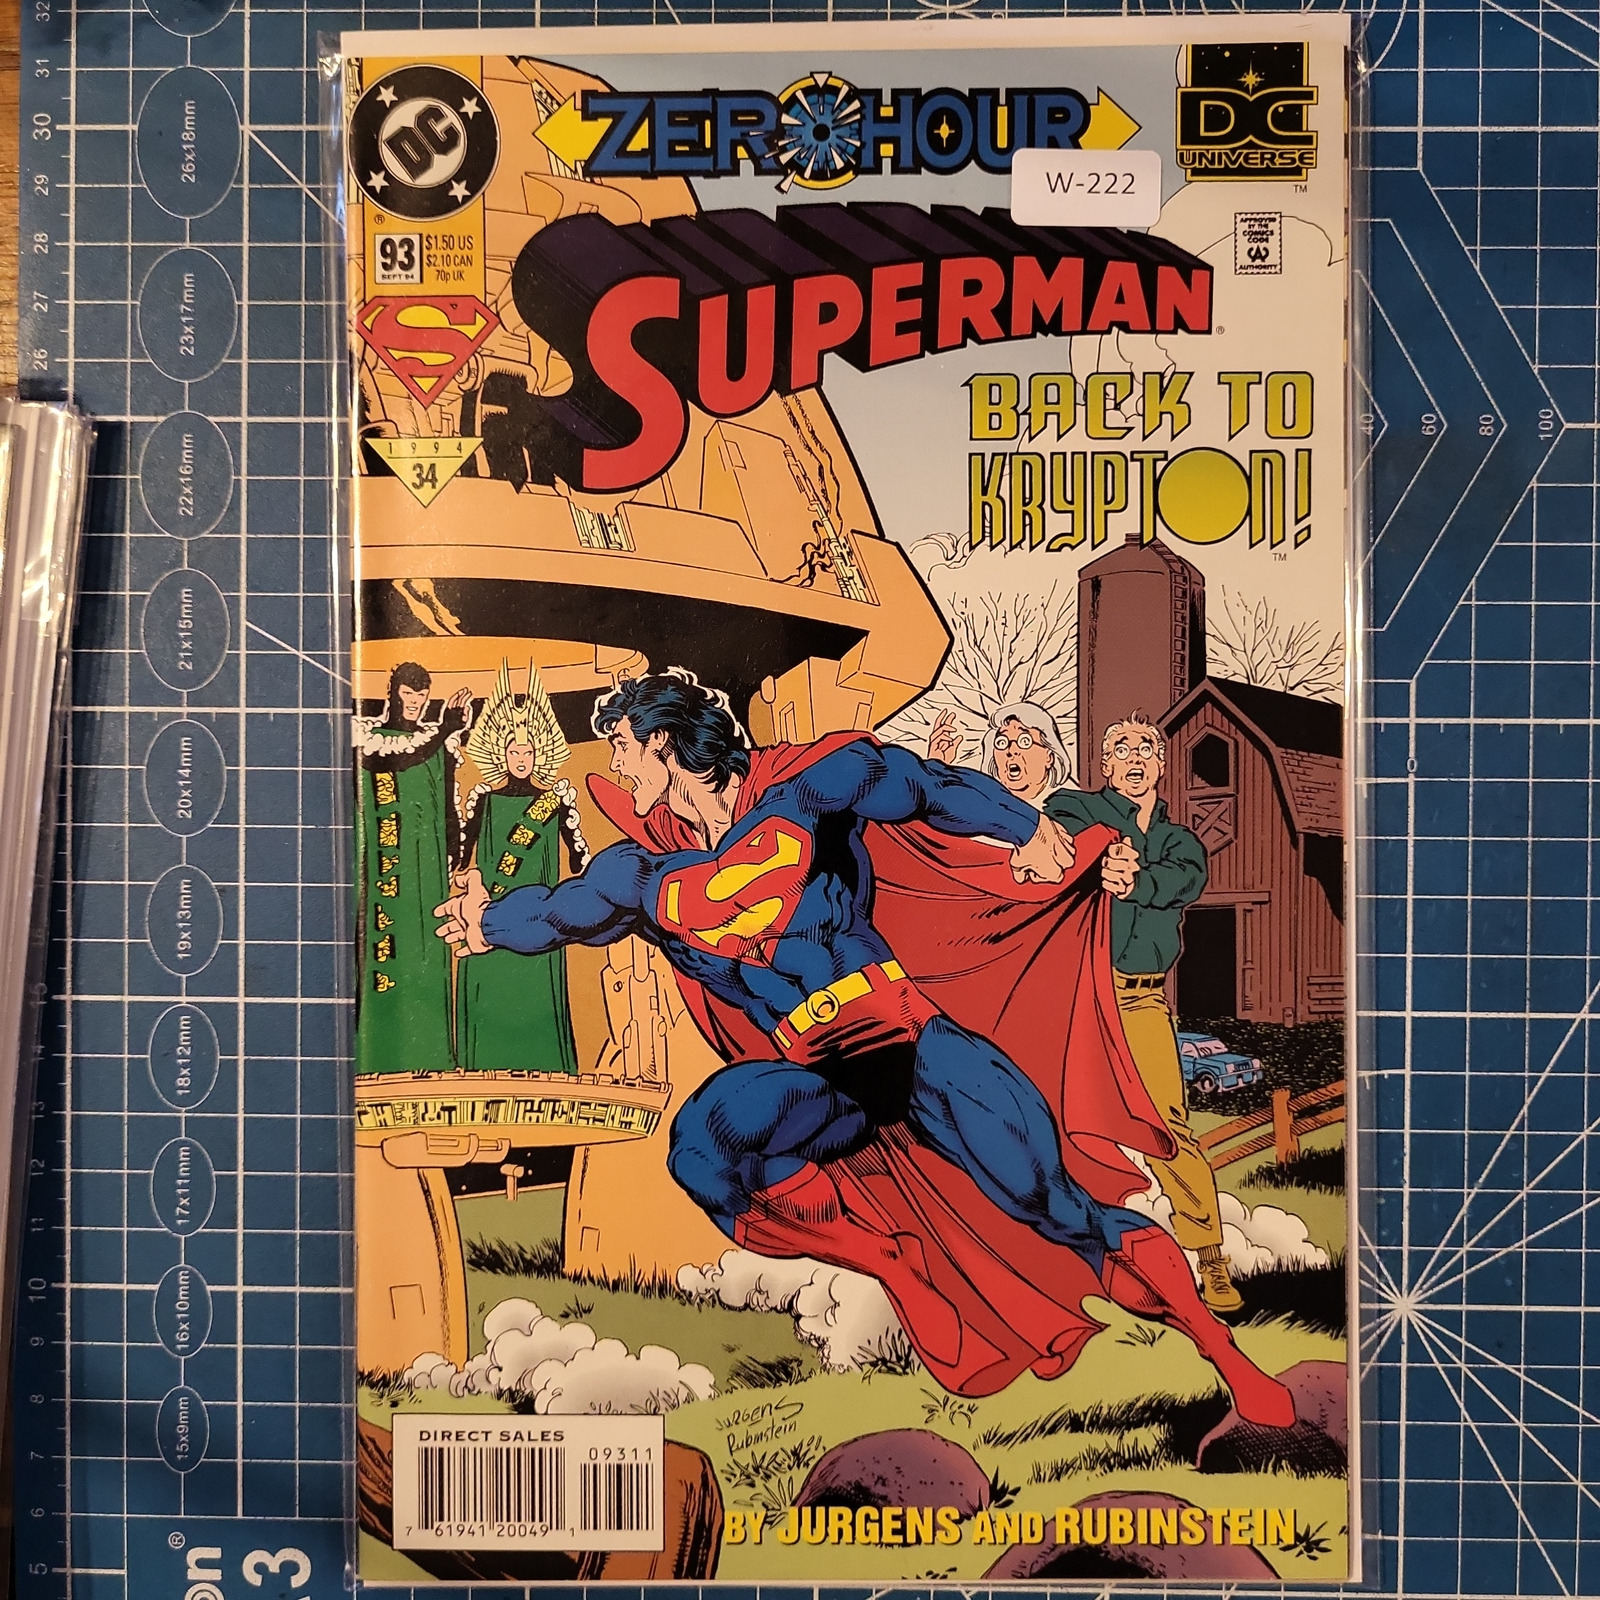 SUPERMAN #93 VOL. 2 8.0+ DC COMIC BOOK W-222